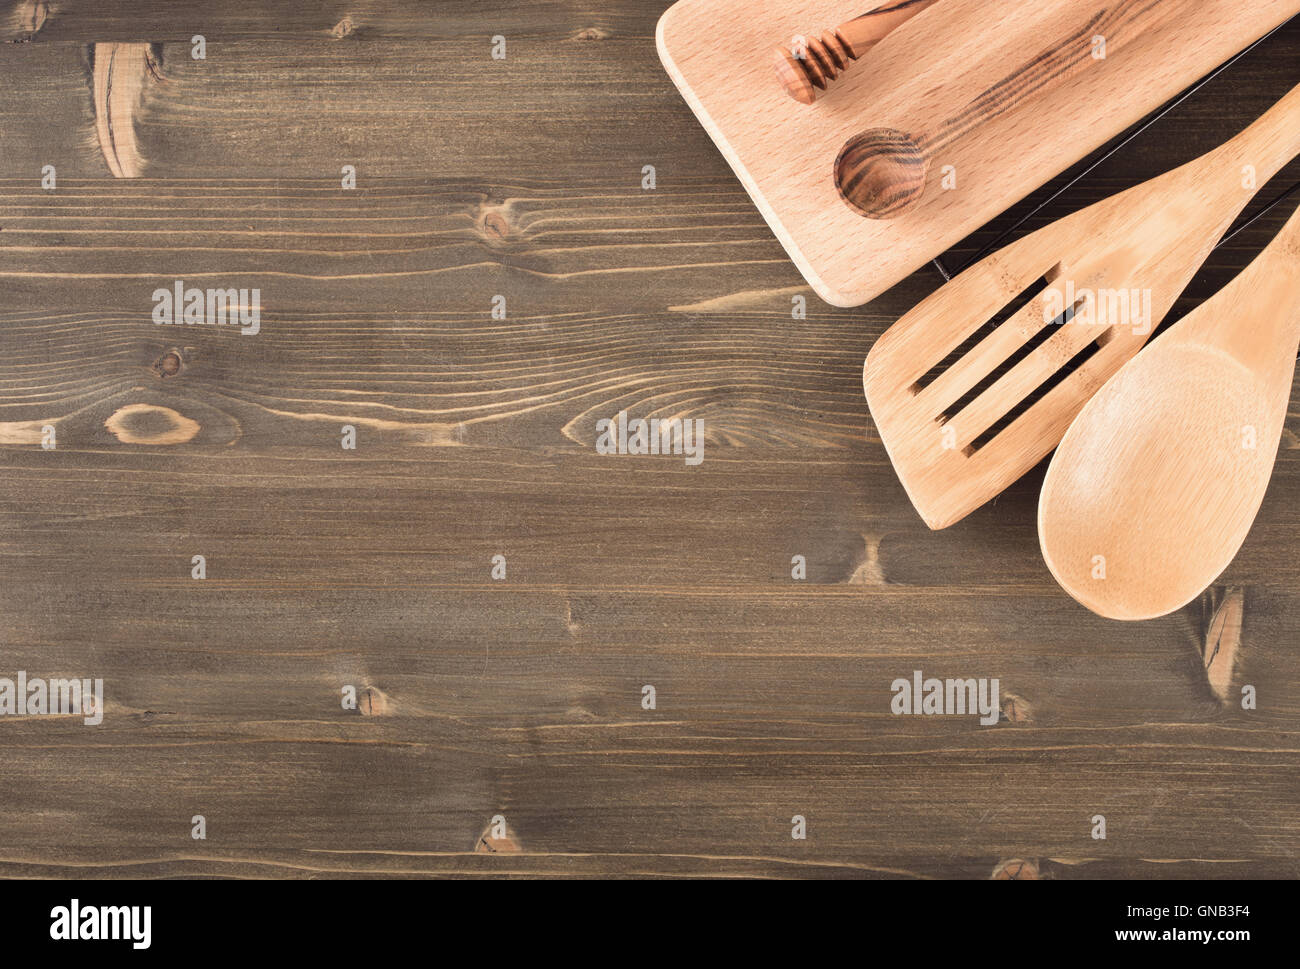 Kitchen utensils on wooden background Stock Photo